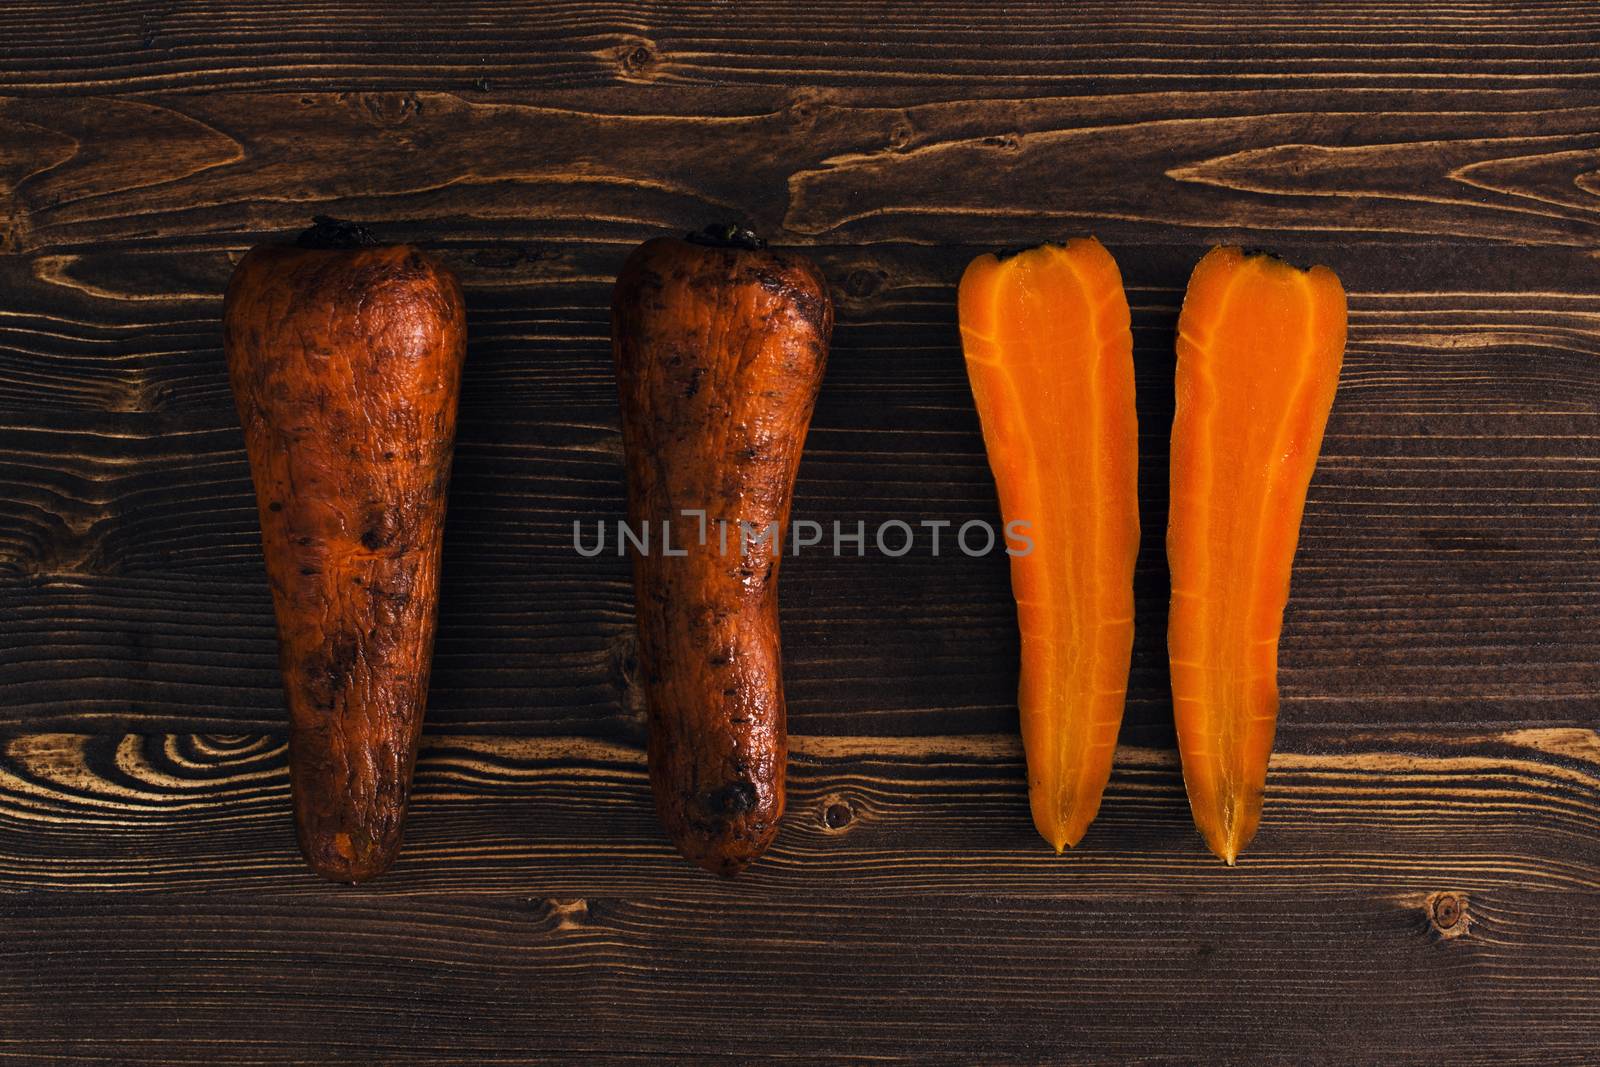 Boiled carrots, dark wooden background by kzen